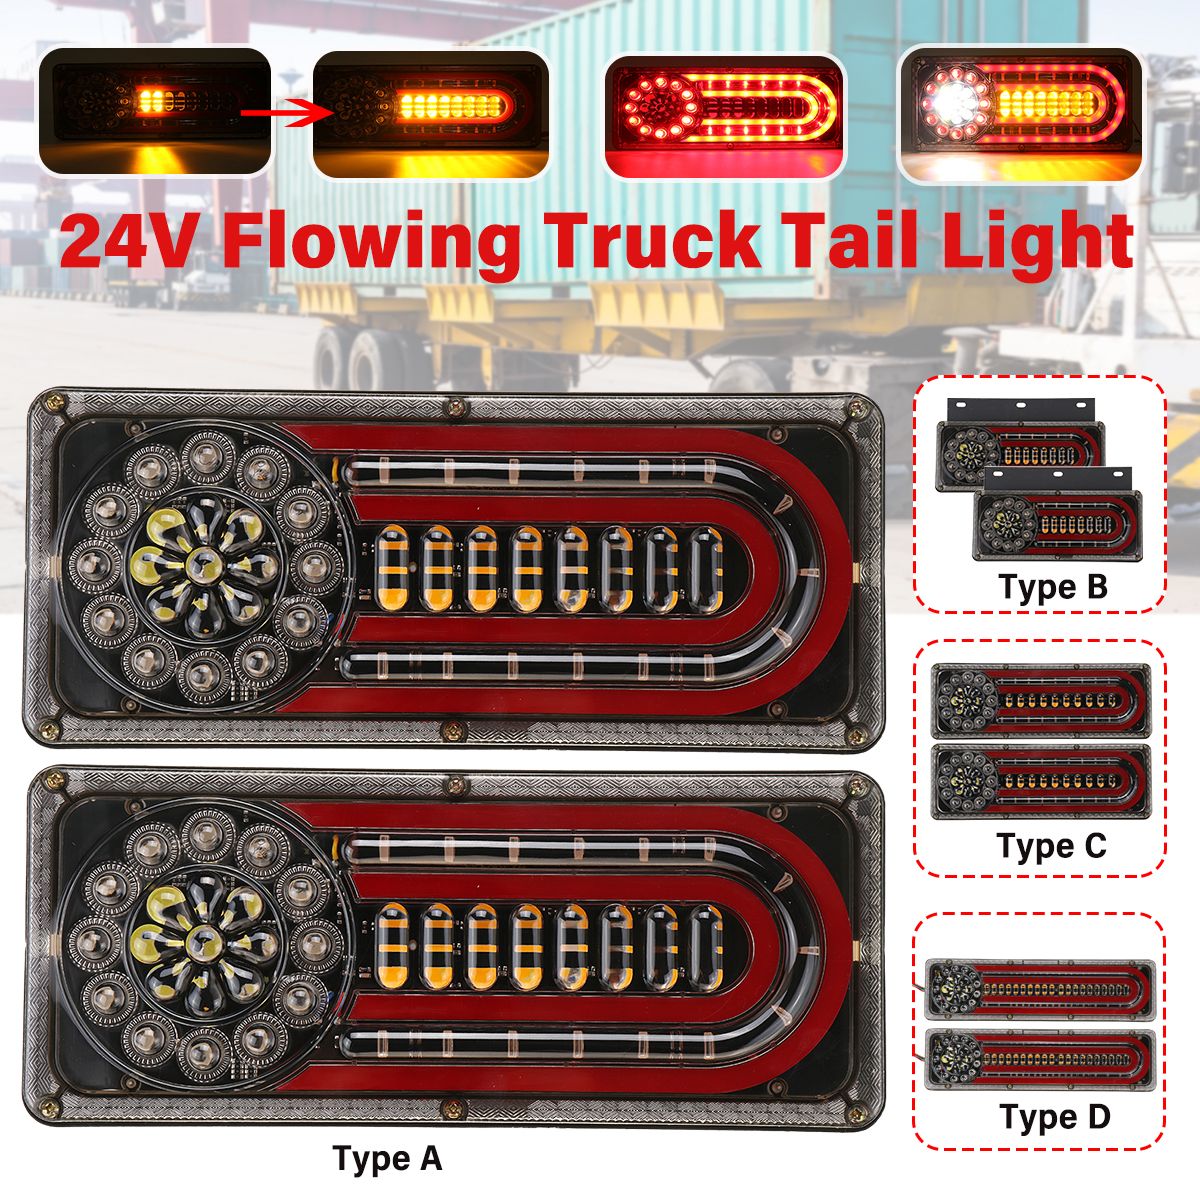 24V-Universal-Led-Flowing-Rear-Tail-Light-Brake-Stop-Lamp-Truck-Caravan-Trailer-1710922